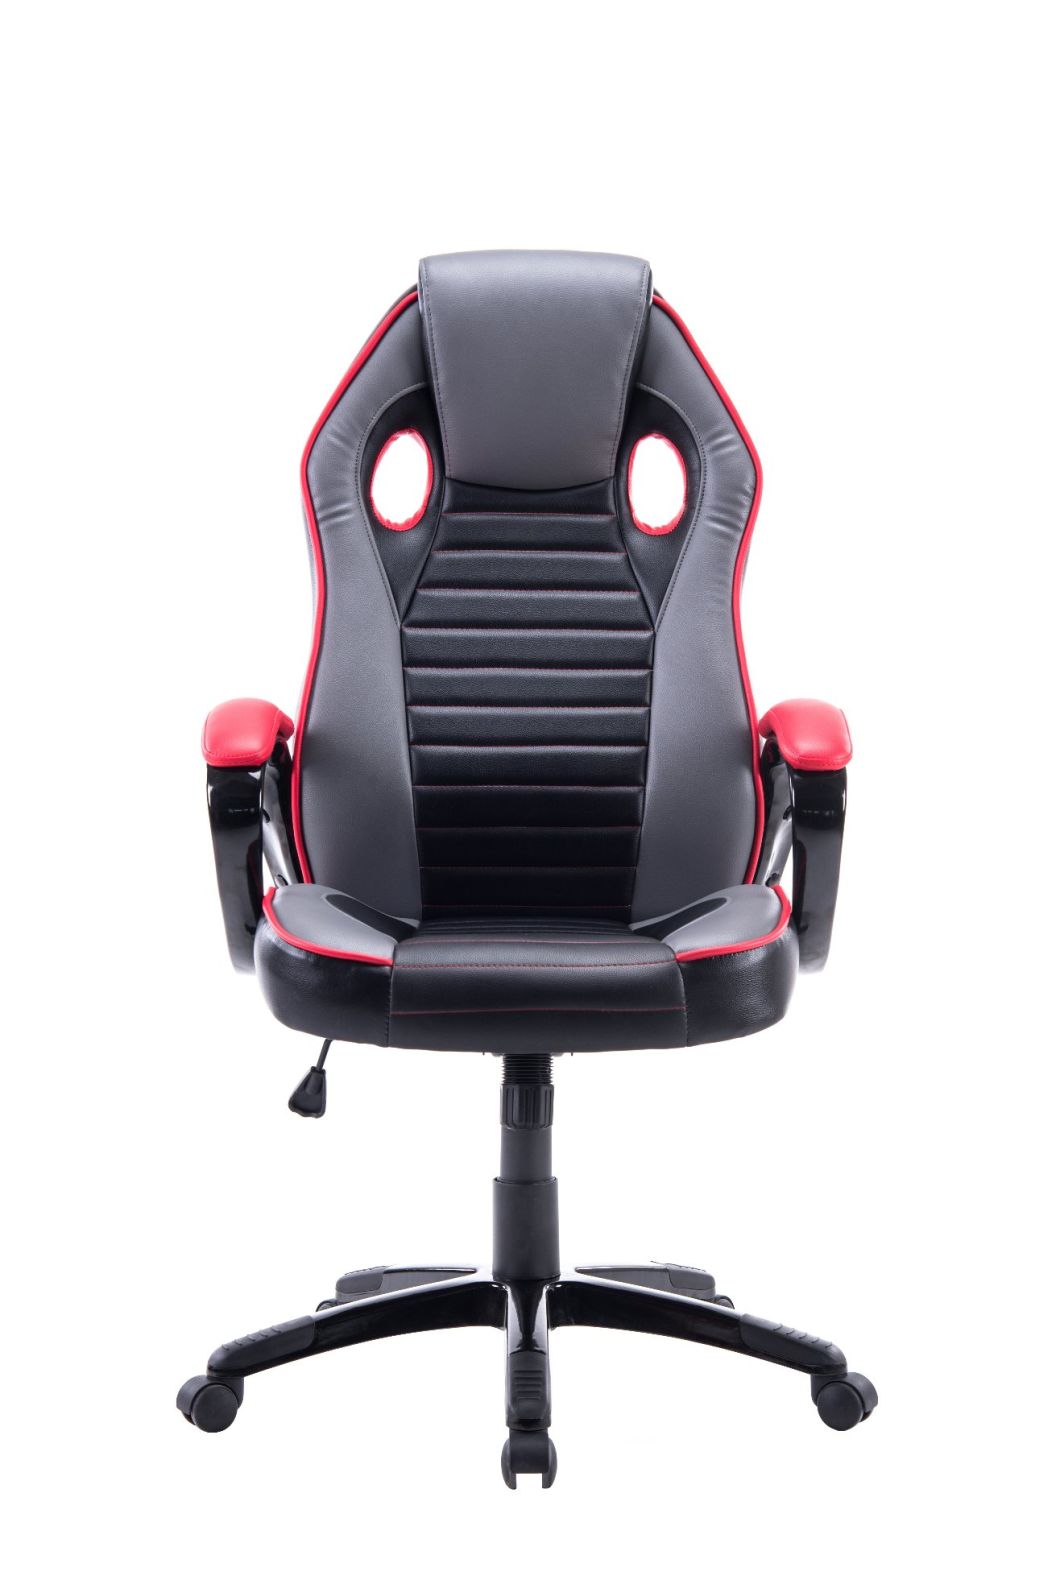 Human Shape Computer Comfortable PU+Mesh Racing Gaming Office Chair